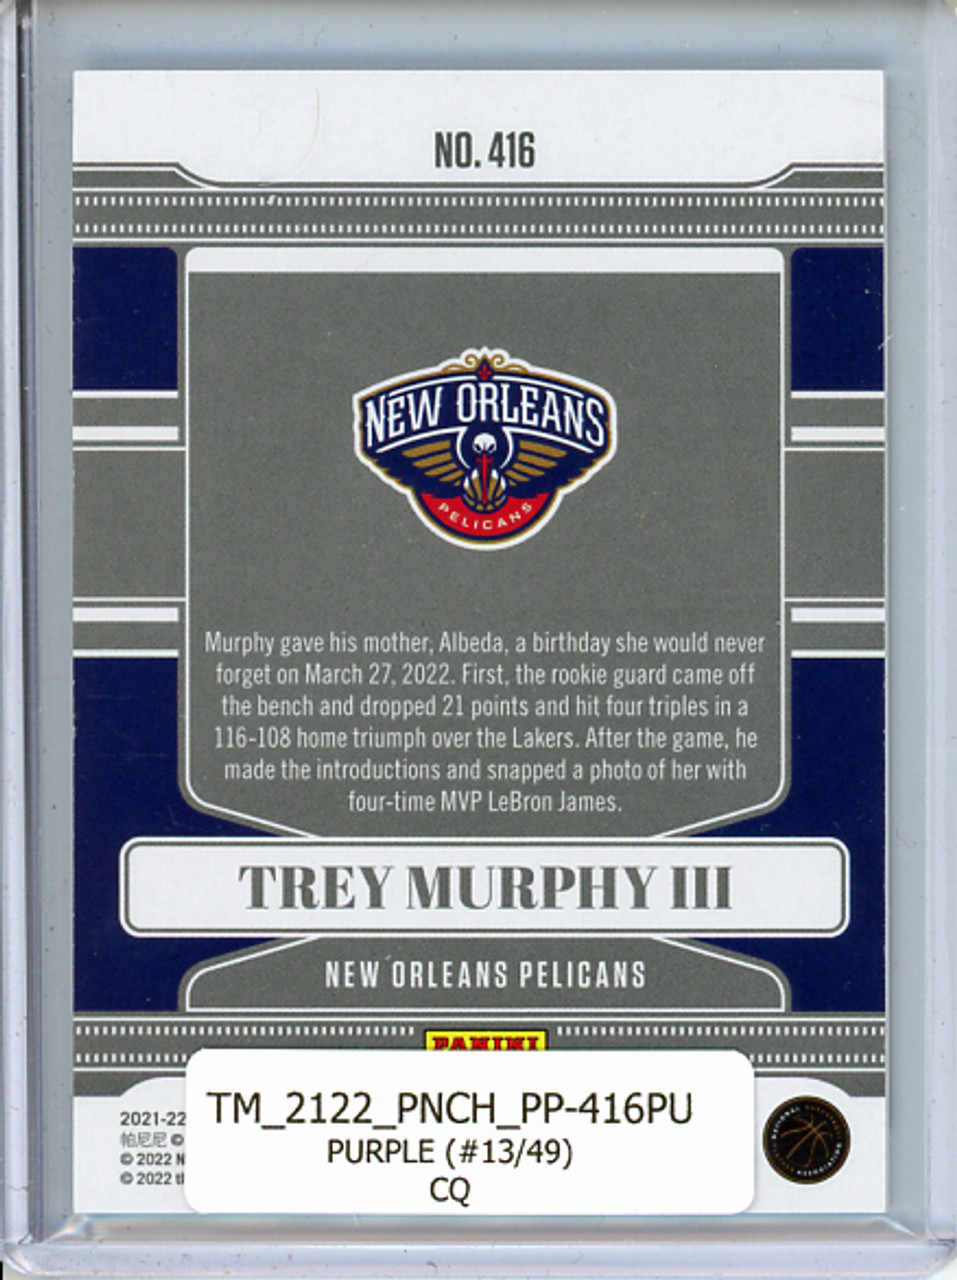 Trey Murphy III 2021-22 Chronicles, Plates & Patches #416 Purple (#13/49) (CQ)